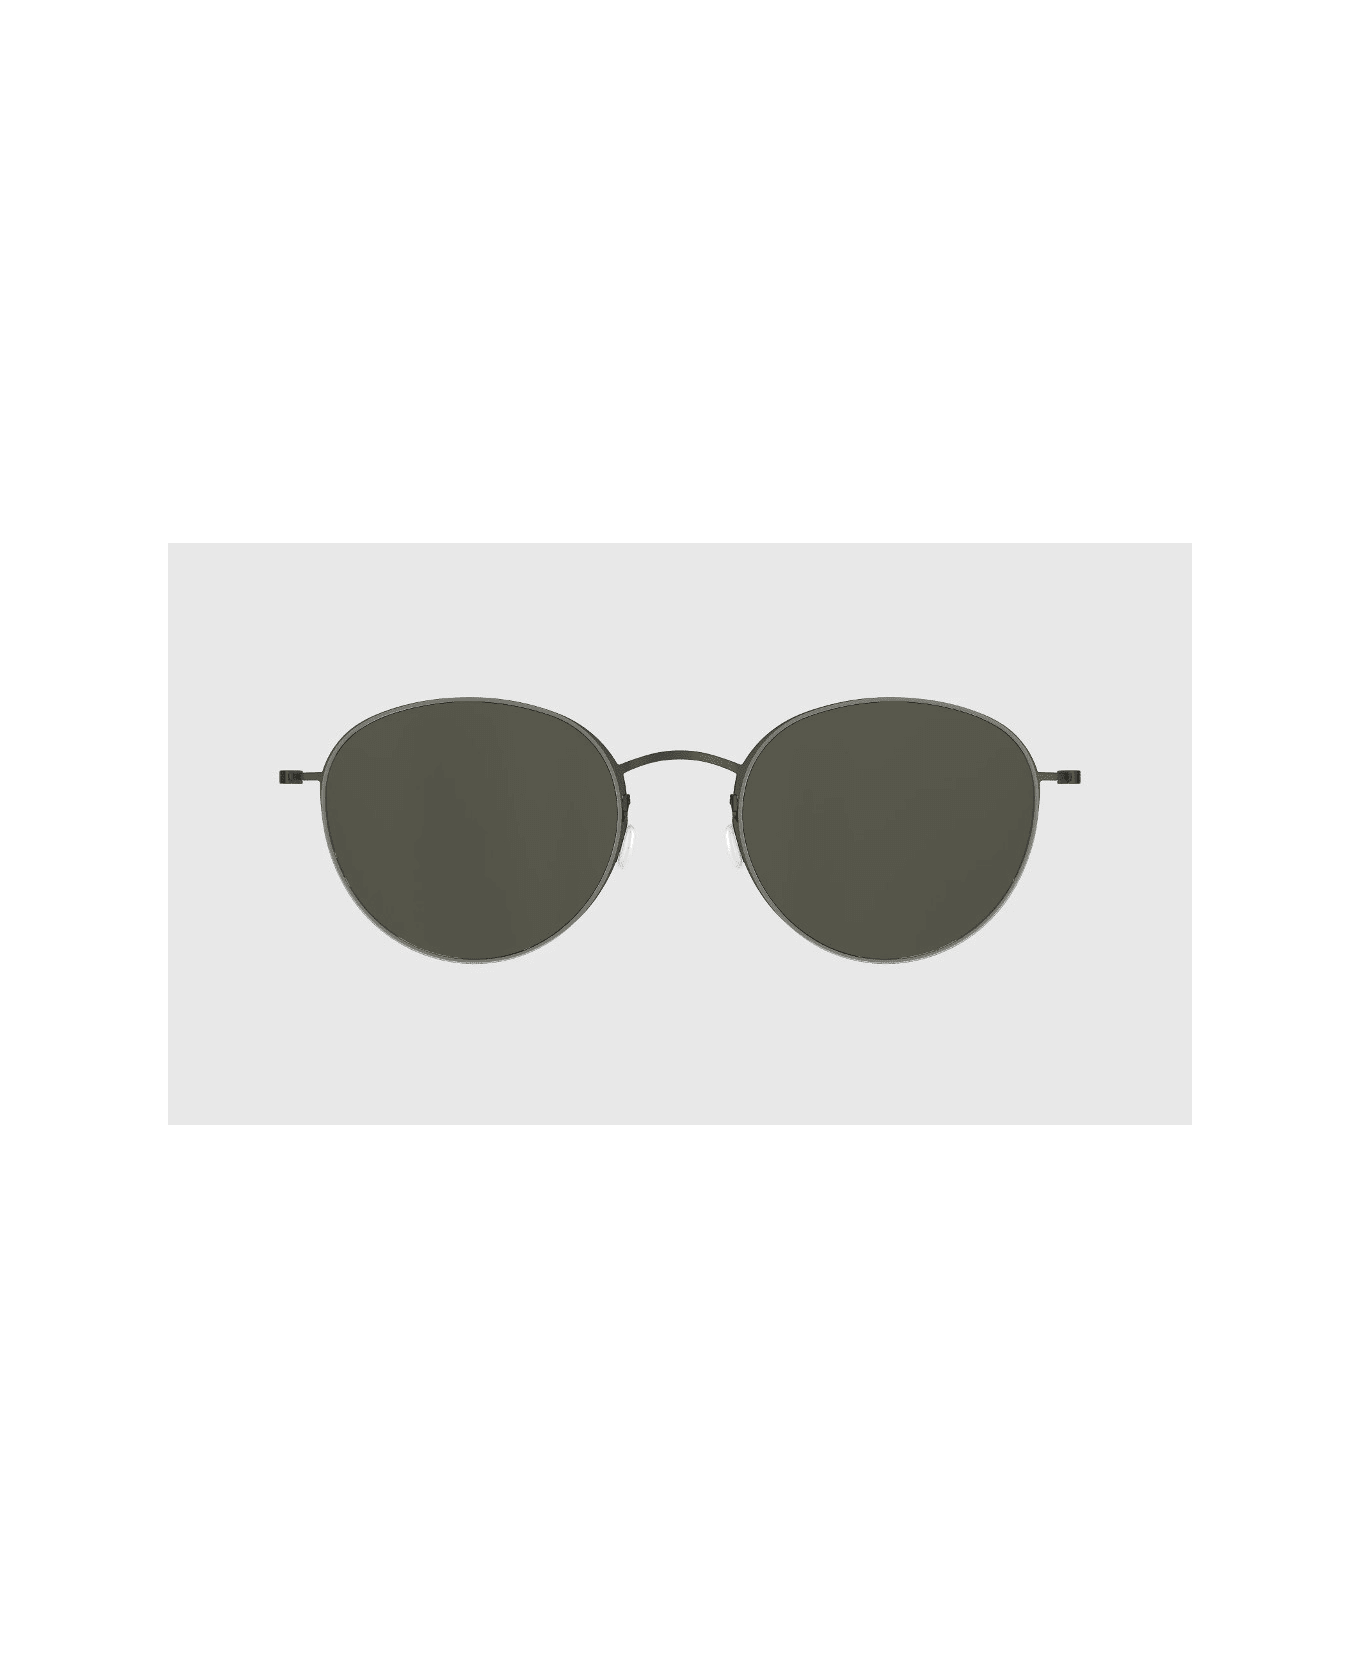 LINDBERG SR 8807 Sunglasses